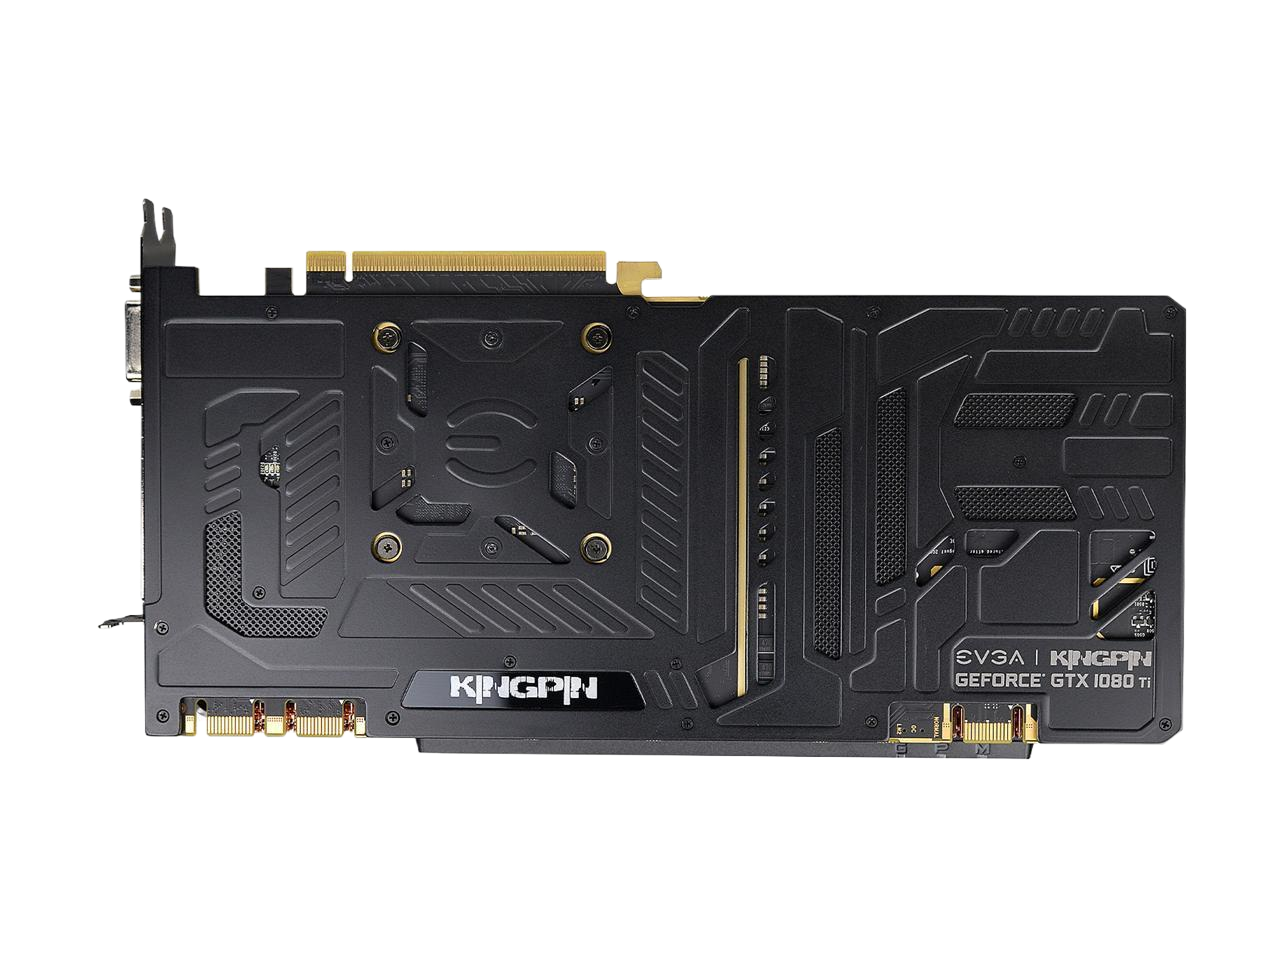 EVGA GeForce GTX 1080 Ti 11GB GDDR5X PCI Express 3.0 SLI Support K|NGP|N GAMING Video Graphics Card 11G-P4-6798-KR